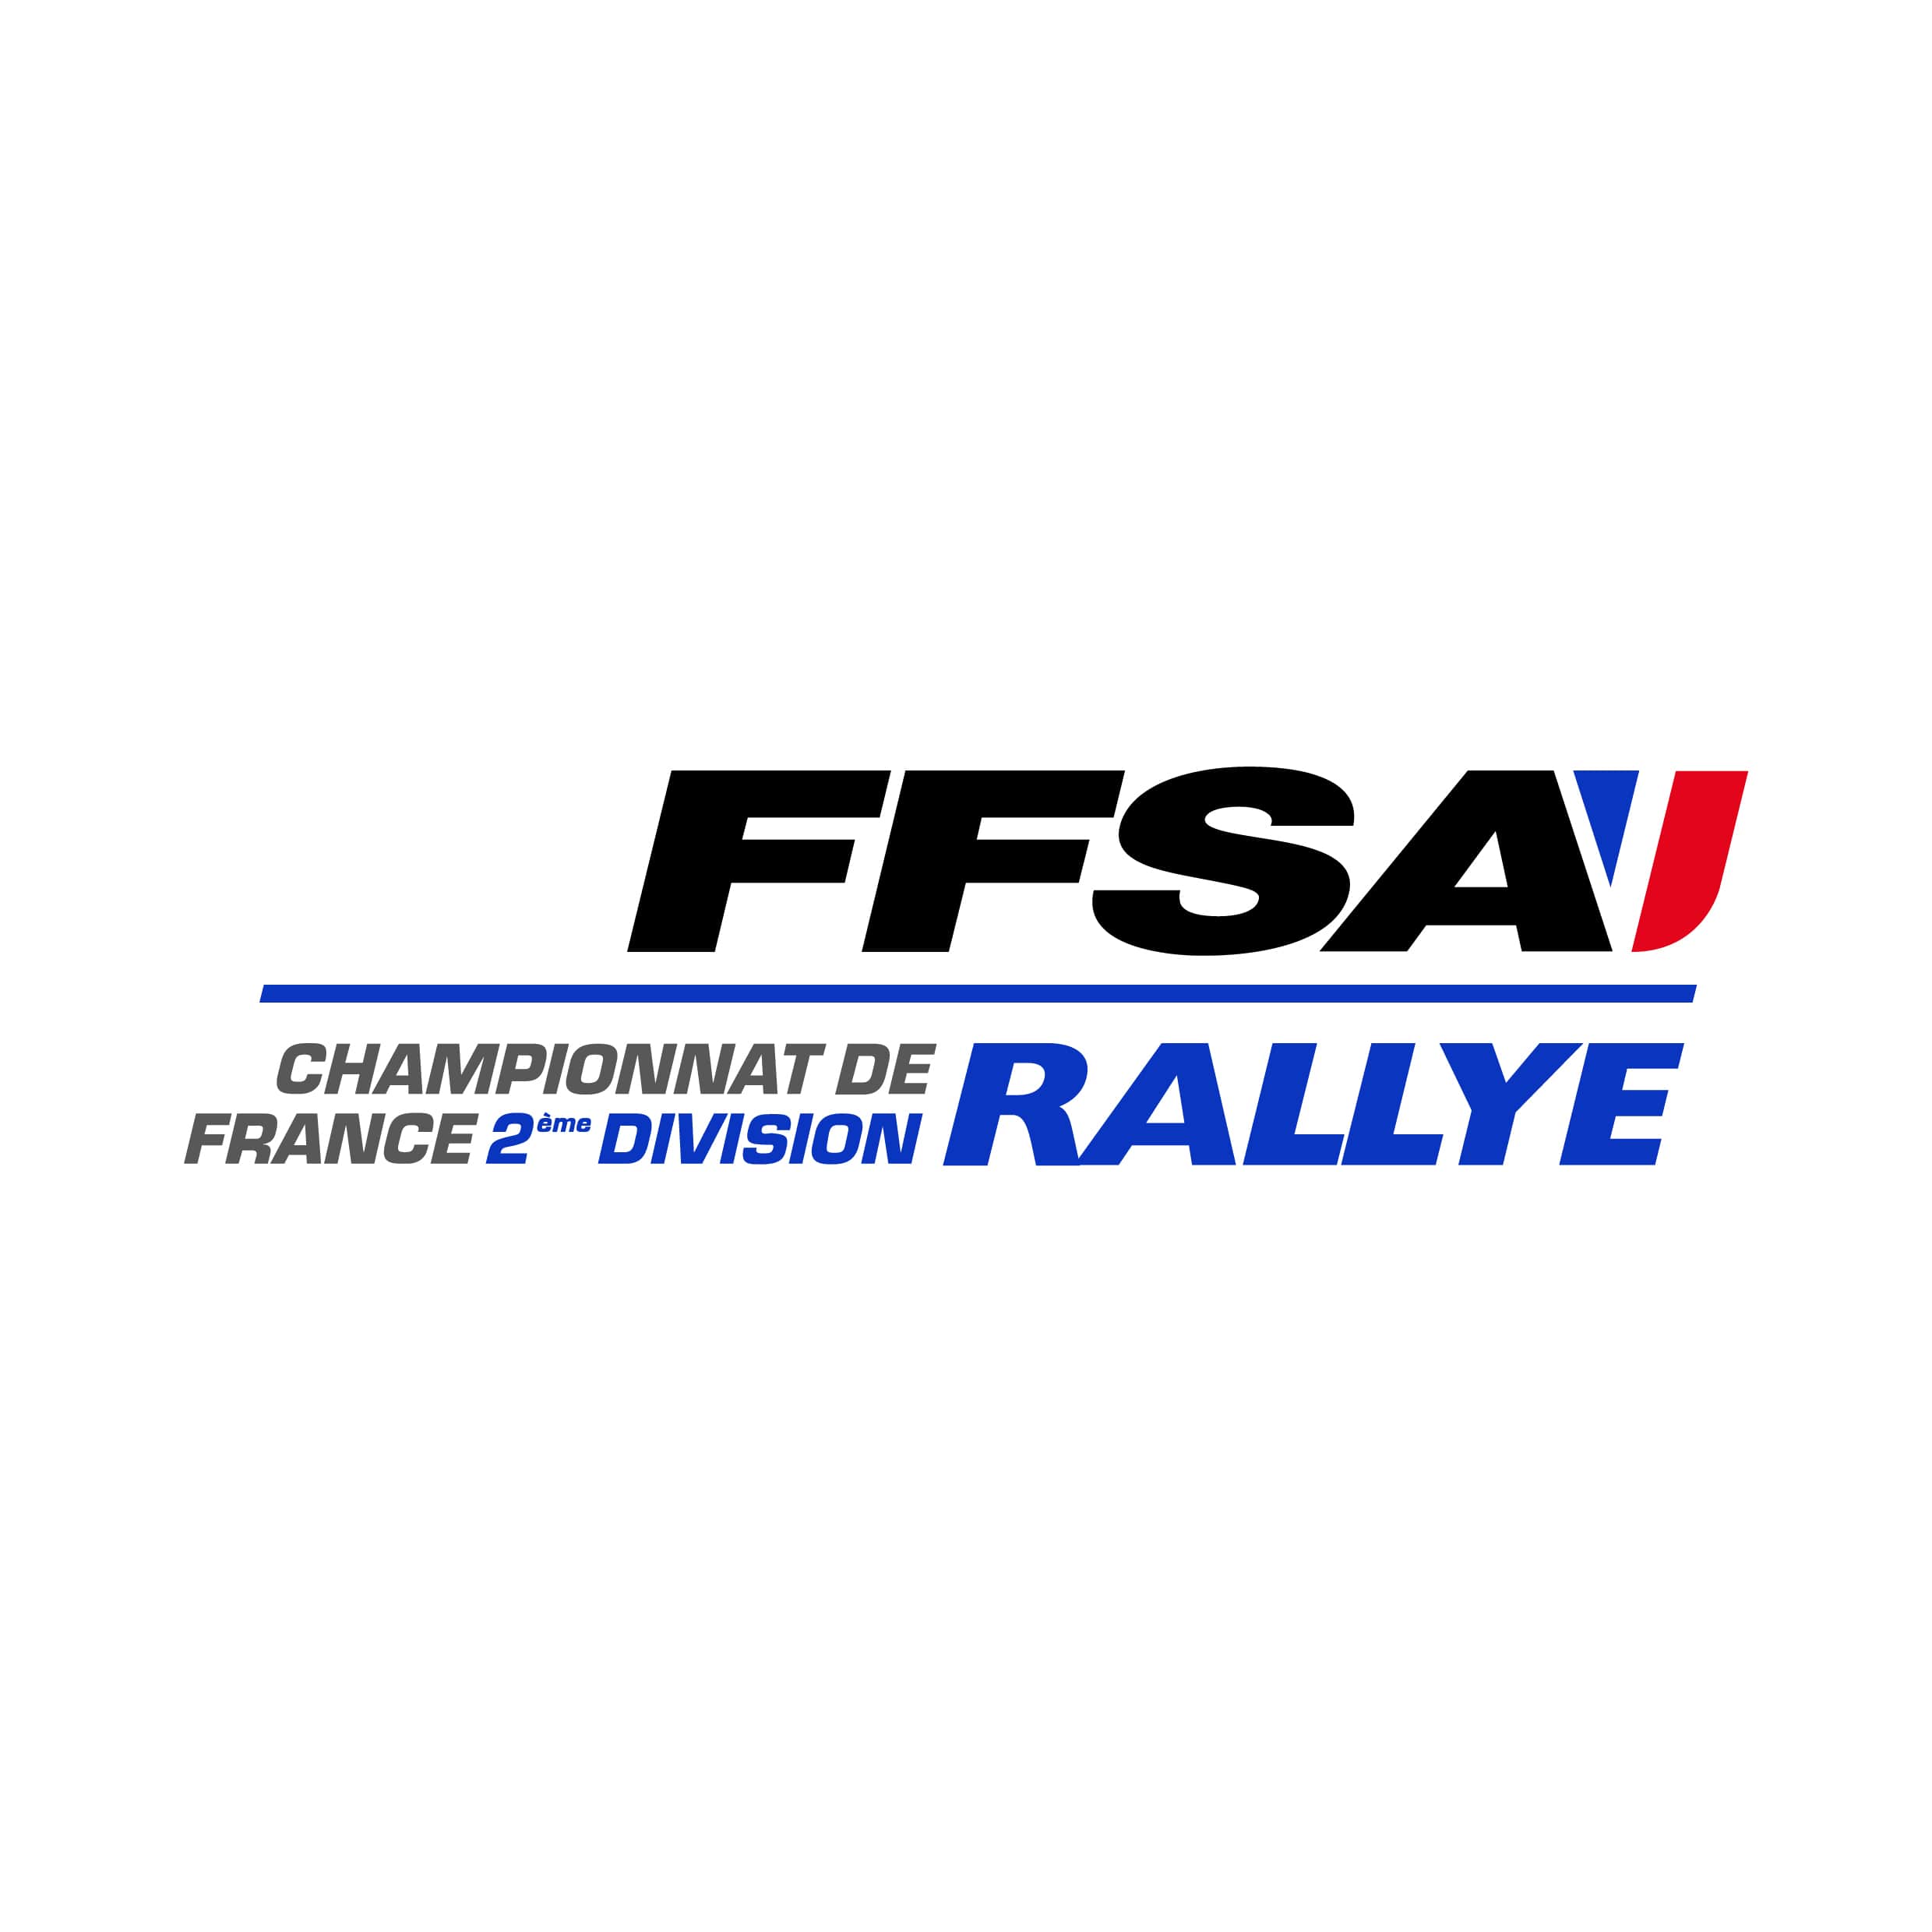 stickers-ffsa-championnat-france-2eme-division-rallye-ref17-sport-automobile-autocollant-voiture-sticker-auto-autocollants-decals-racing-min